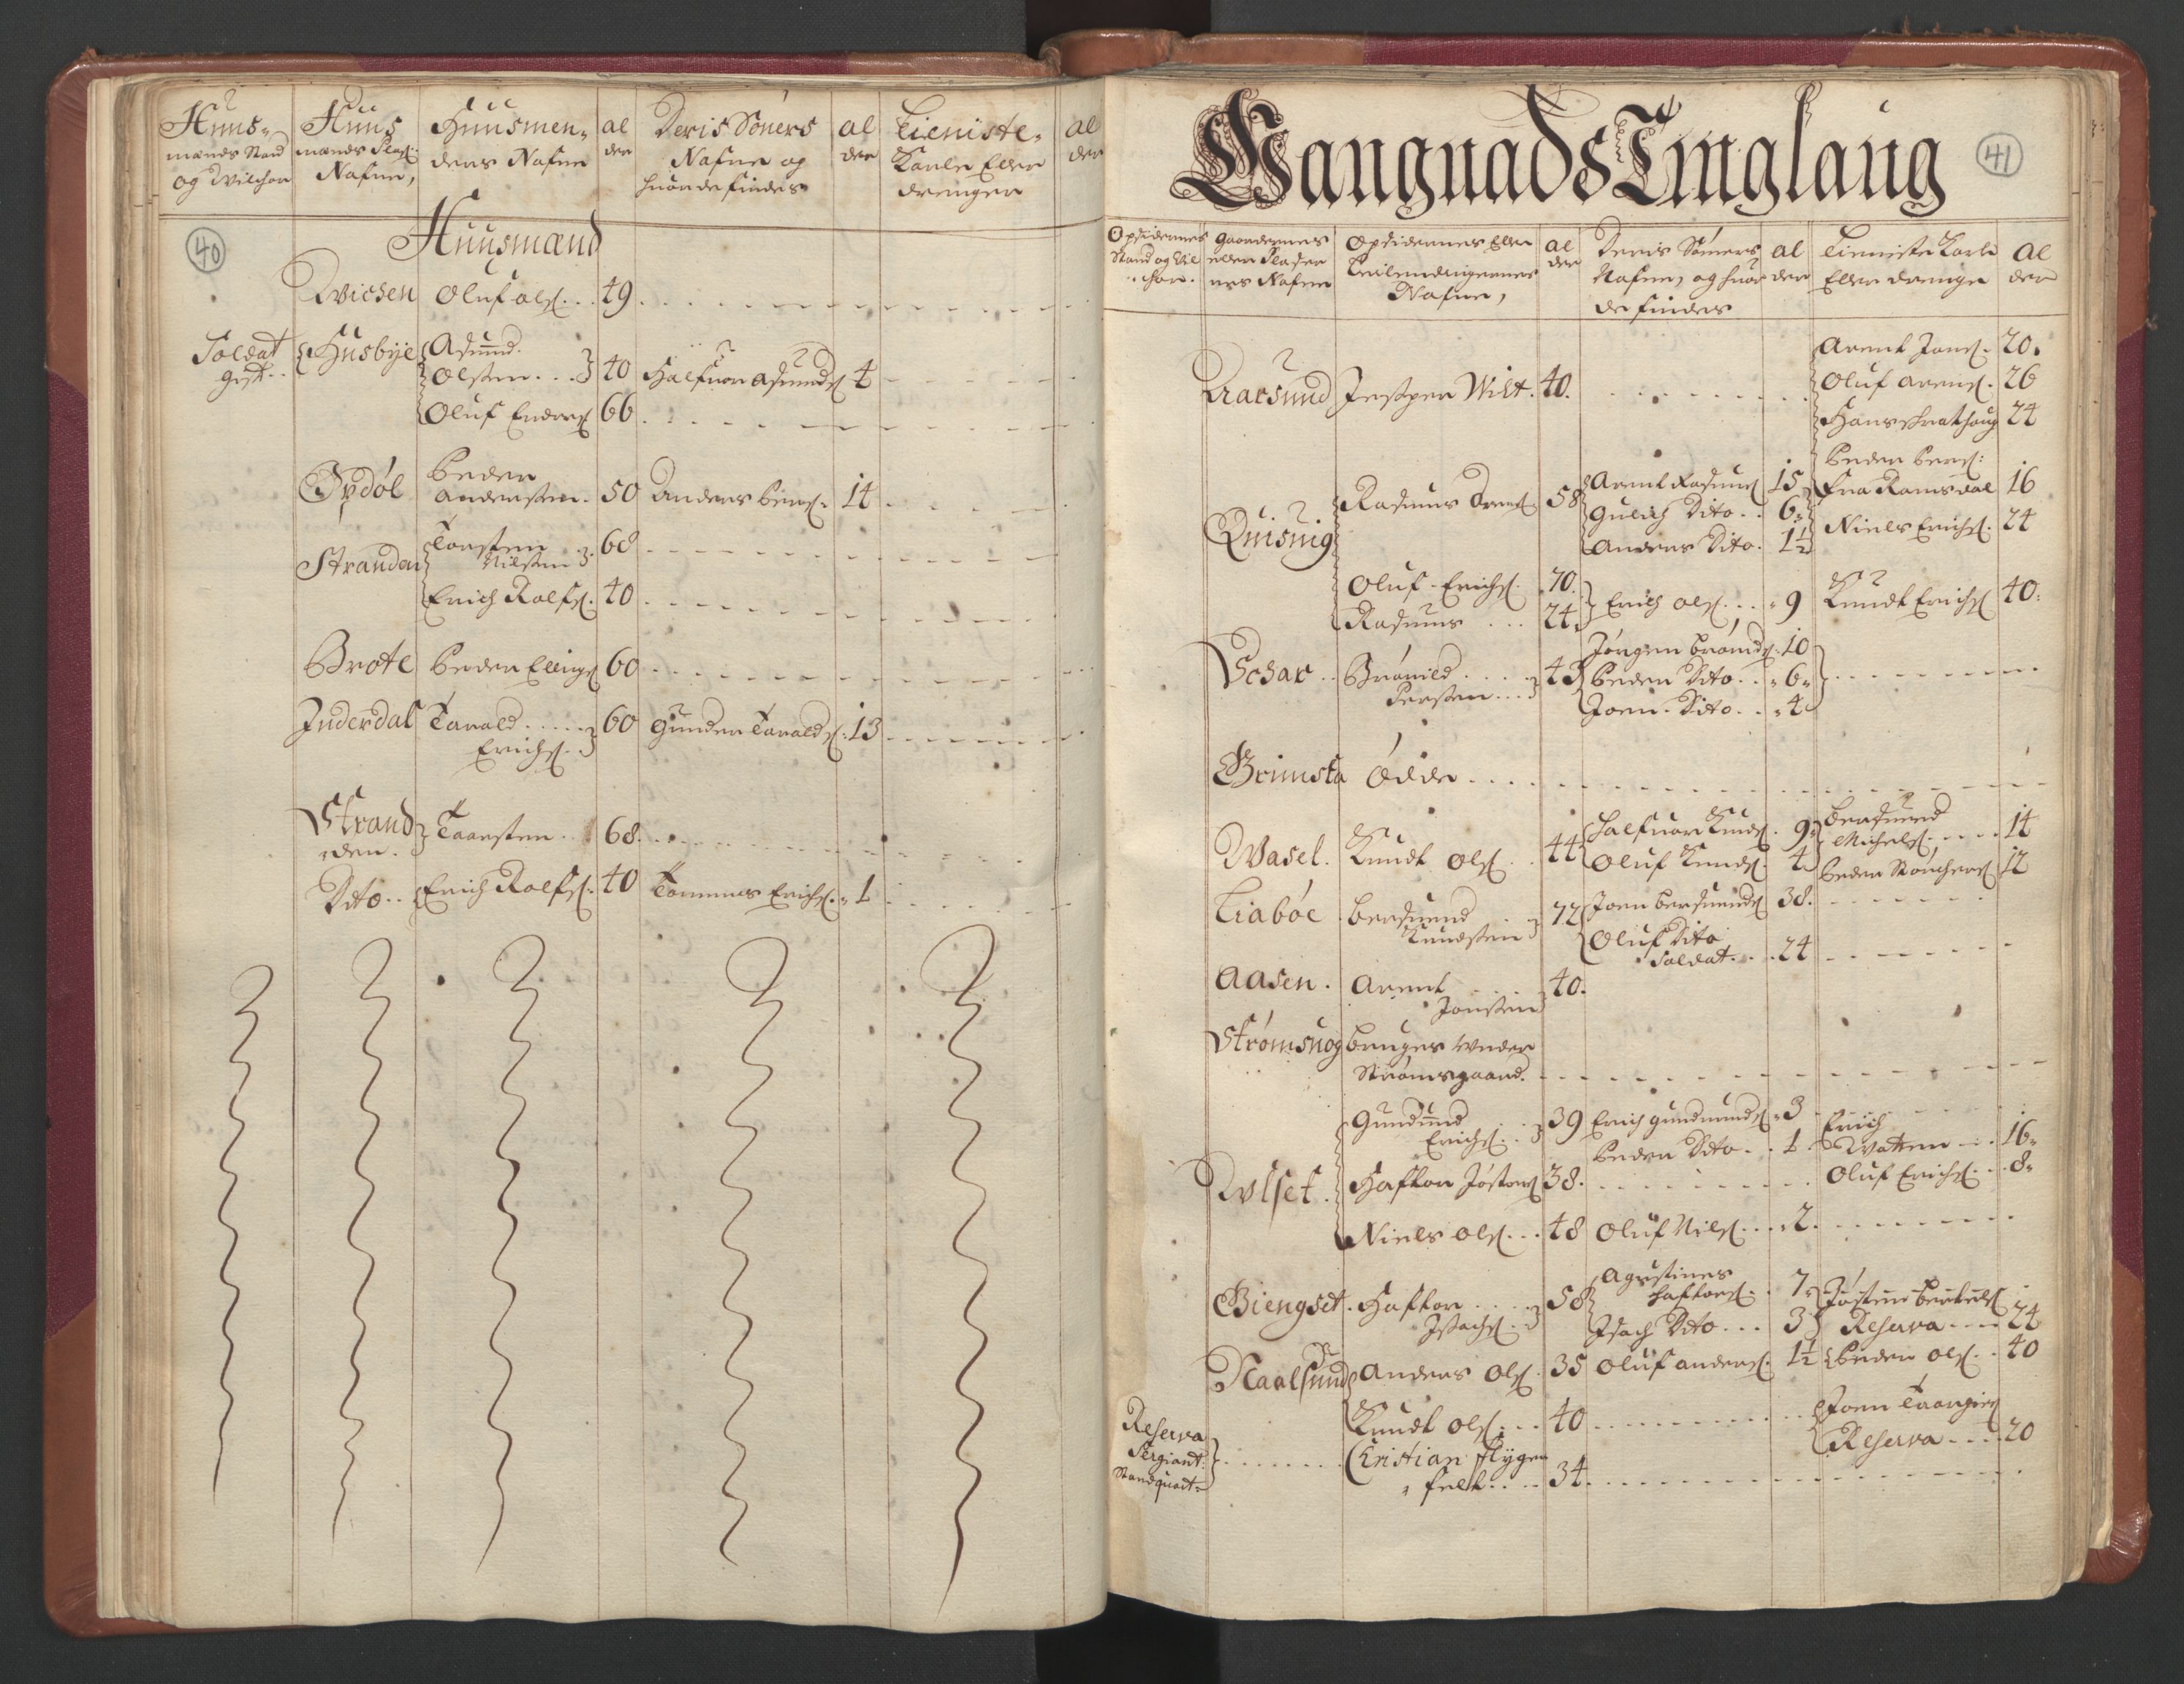 RA, Census (manntall) 1701, no. 11: Nordmøre fogderi and Romsdal fogderi, 1701, p. 40-41